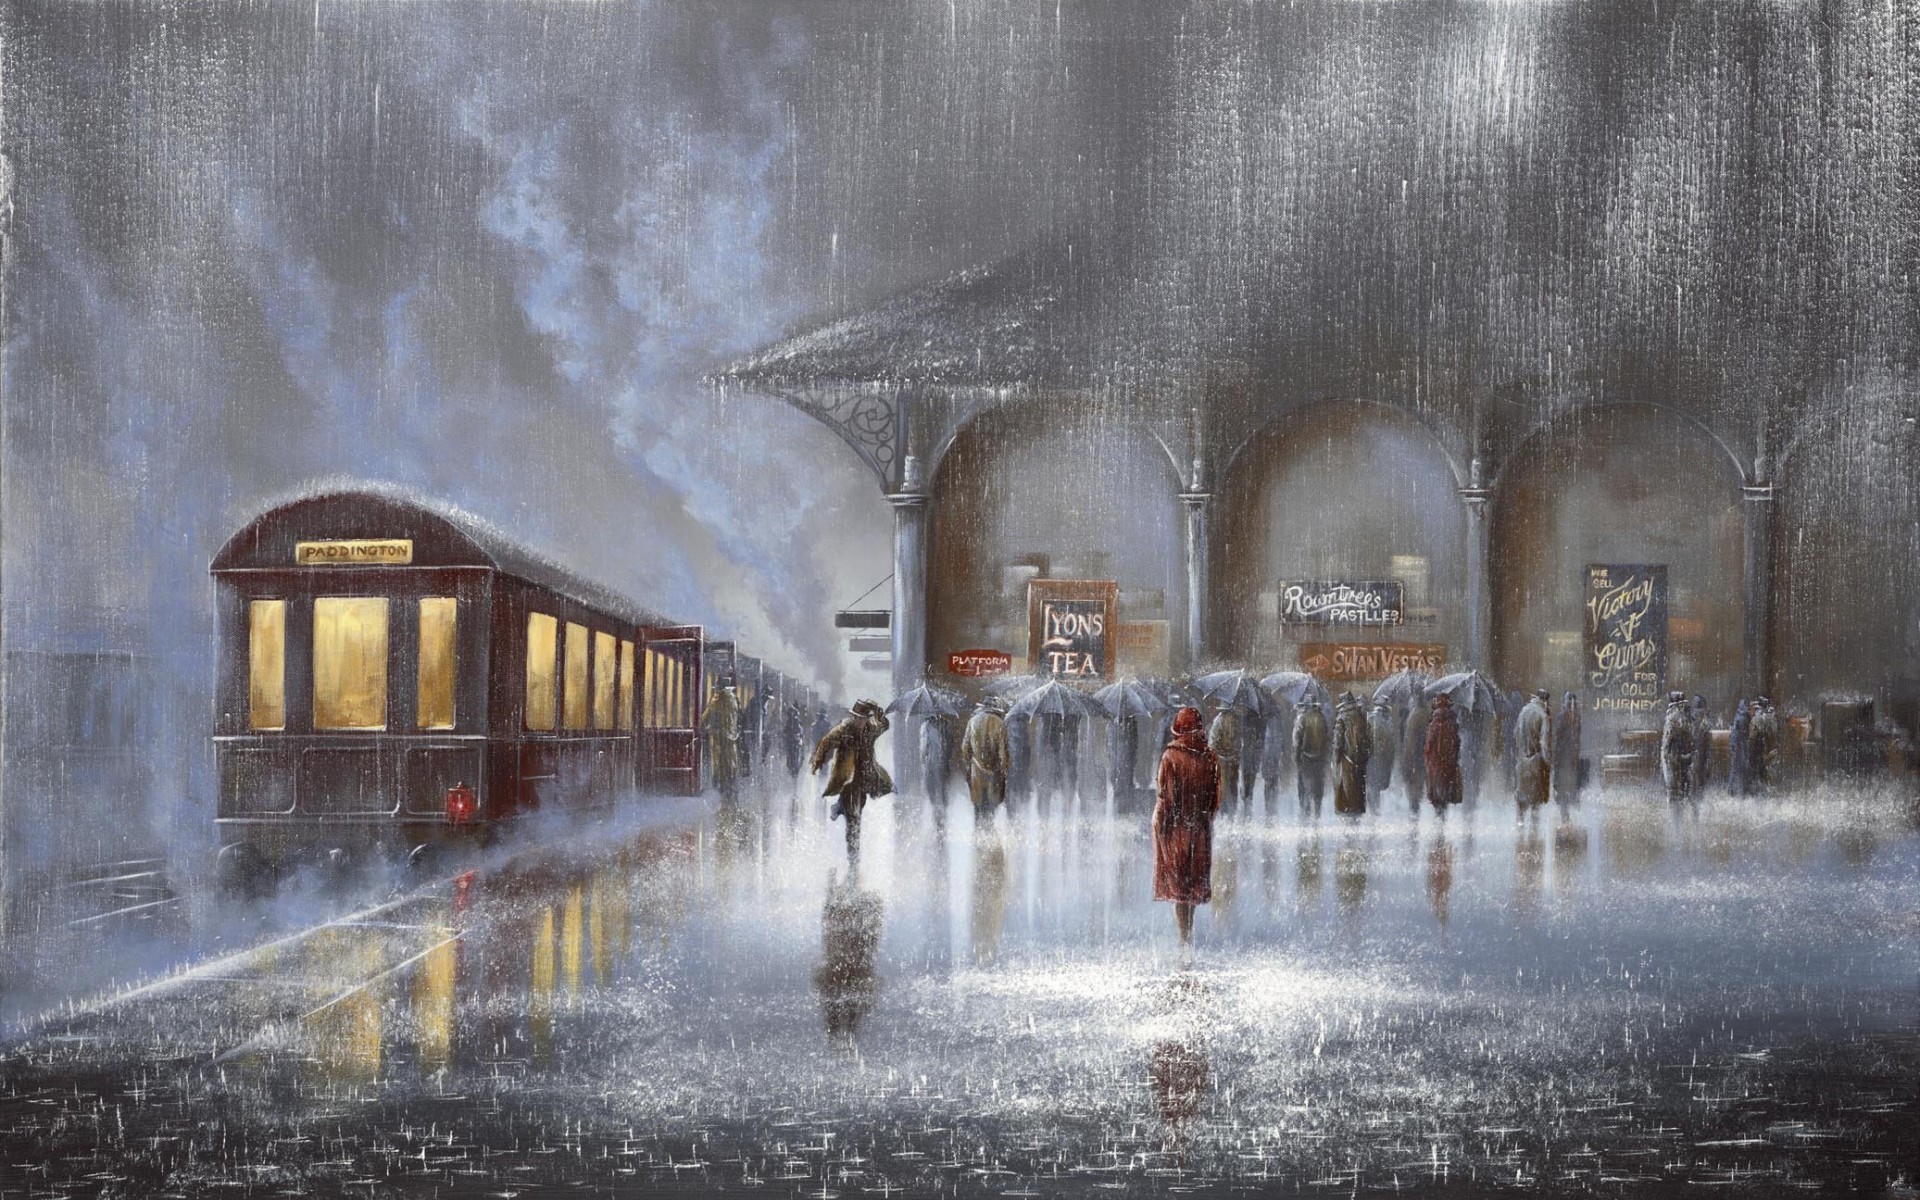 picture, Jeff, Rowland, Station, Rain, Meeting, Man, Woman, People, Umbrellas, Car, Train, Platform, Men, Women Wallpaper